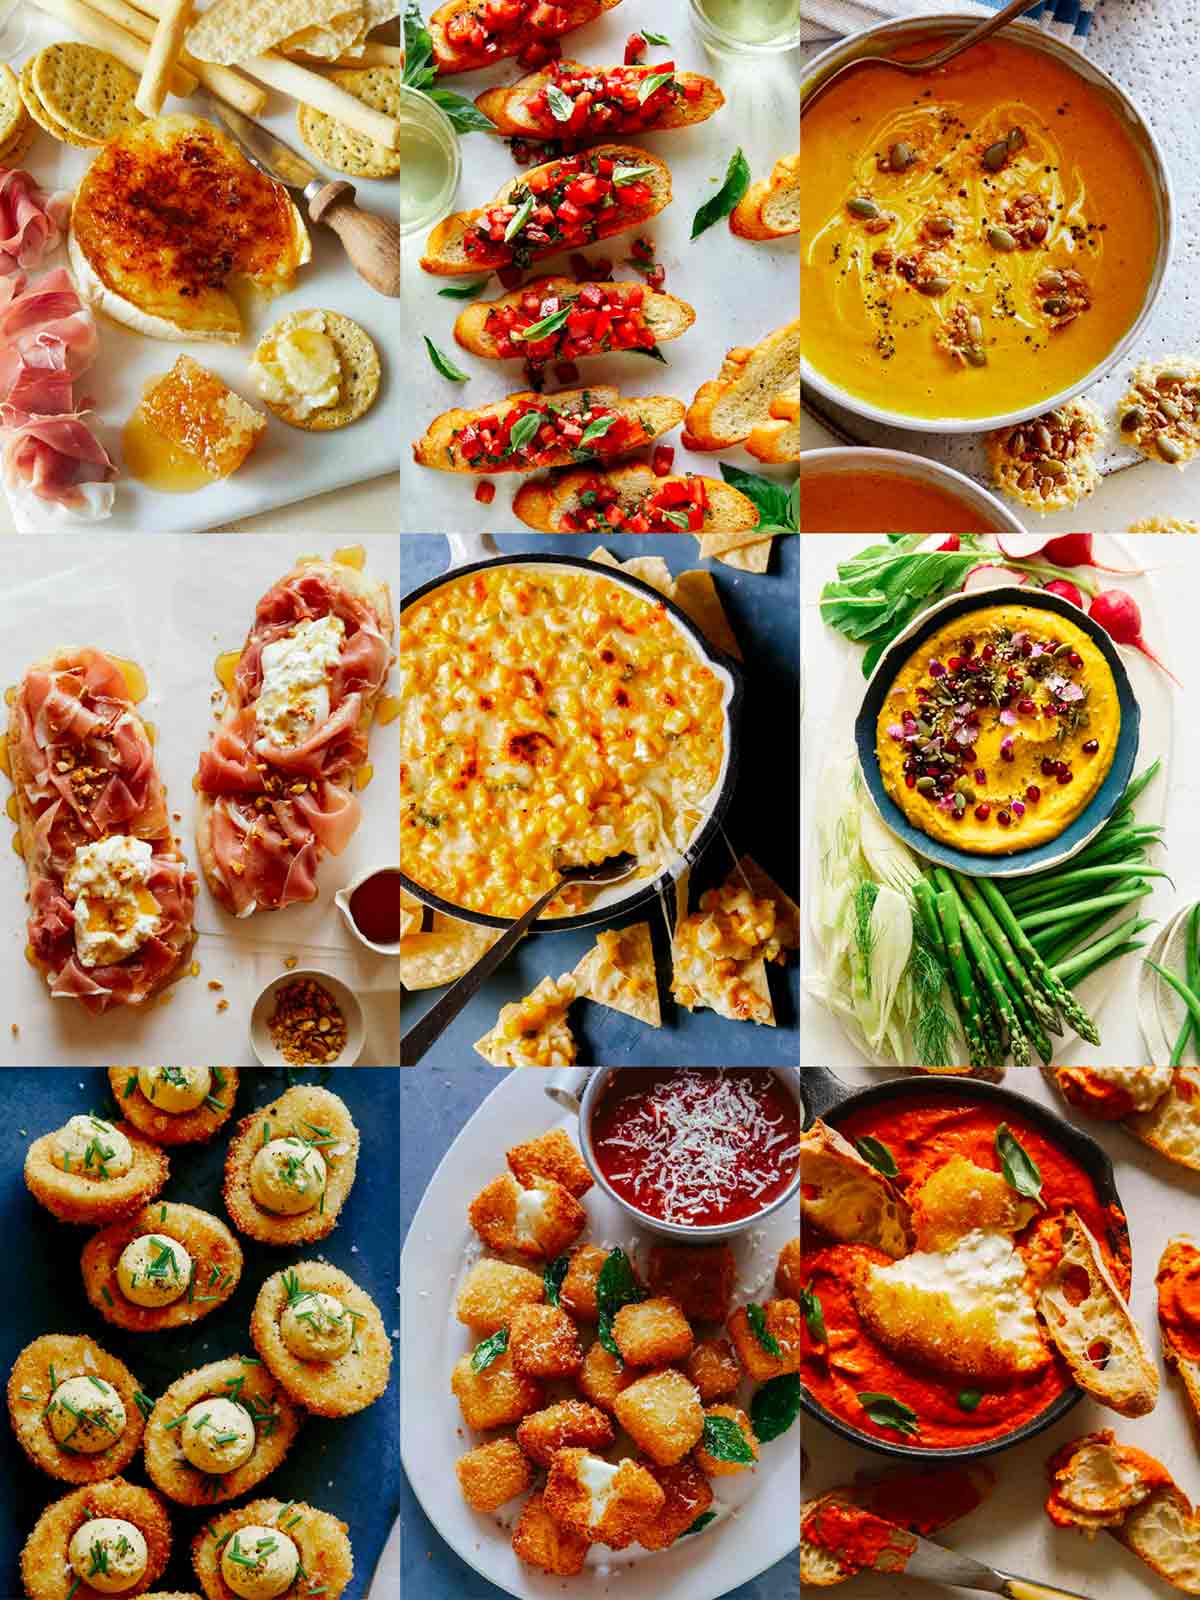 https://www.spoonforkbacon.com/wp-content/uploads/2021/11/Best_thanksgiving-appetizers.jpg